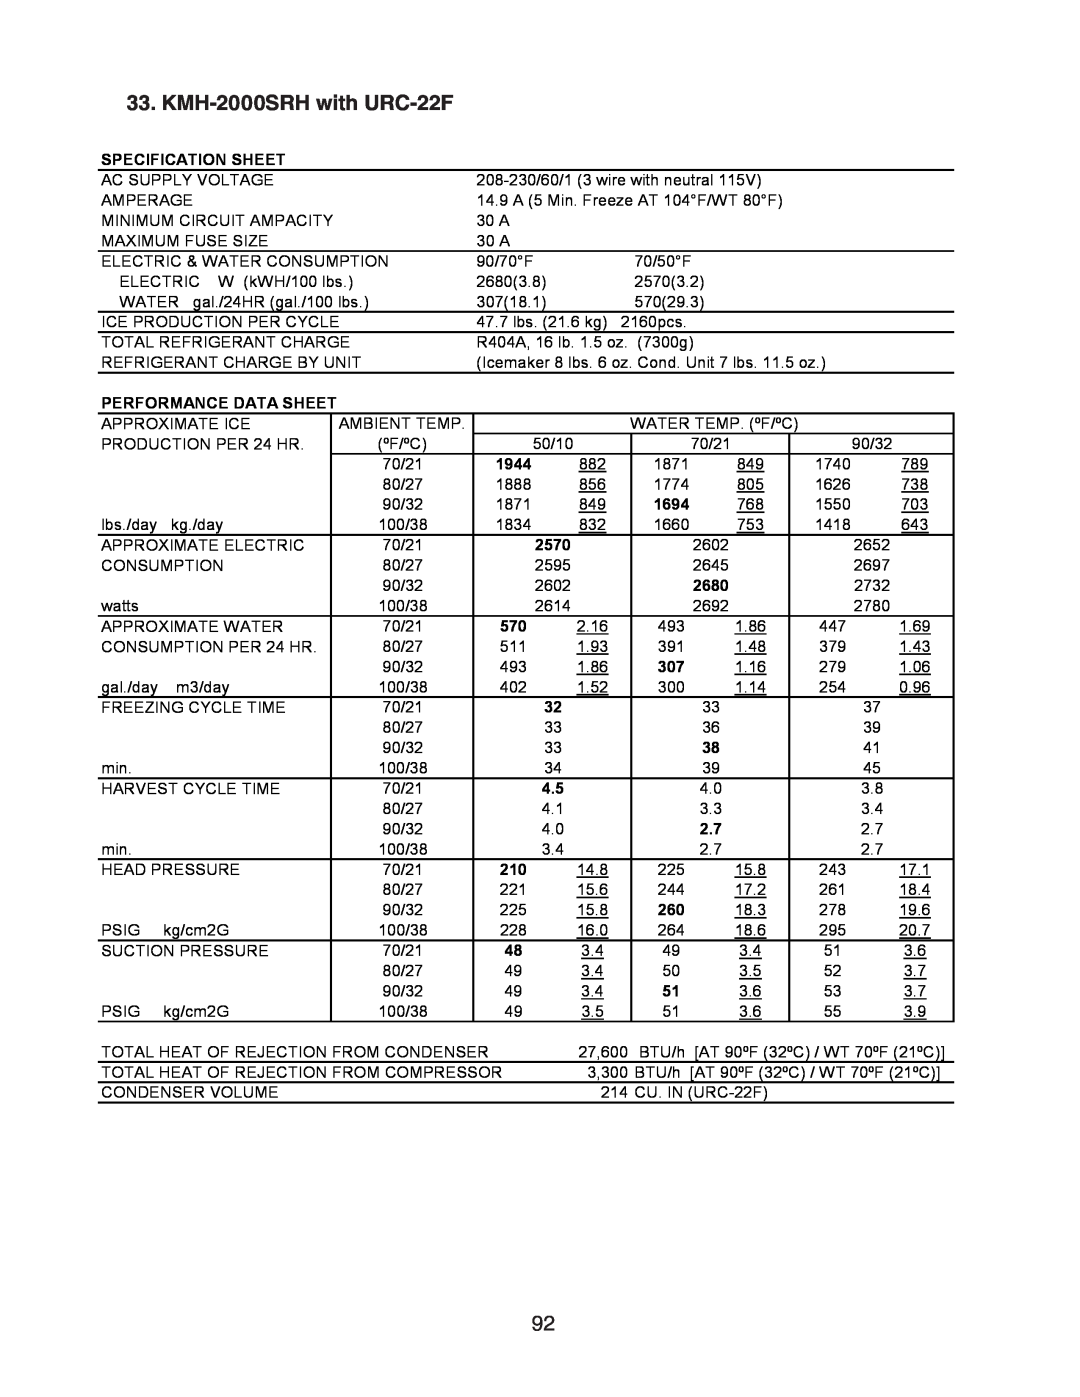 Hoshizaki SRH/3 KM-1400SWH-M, SWH/3 KMH-2000SRH with URC-22F, Specification Sheet, Performance Data Sheet, 1944, 2570 